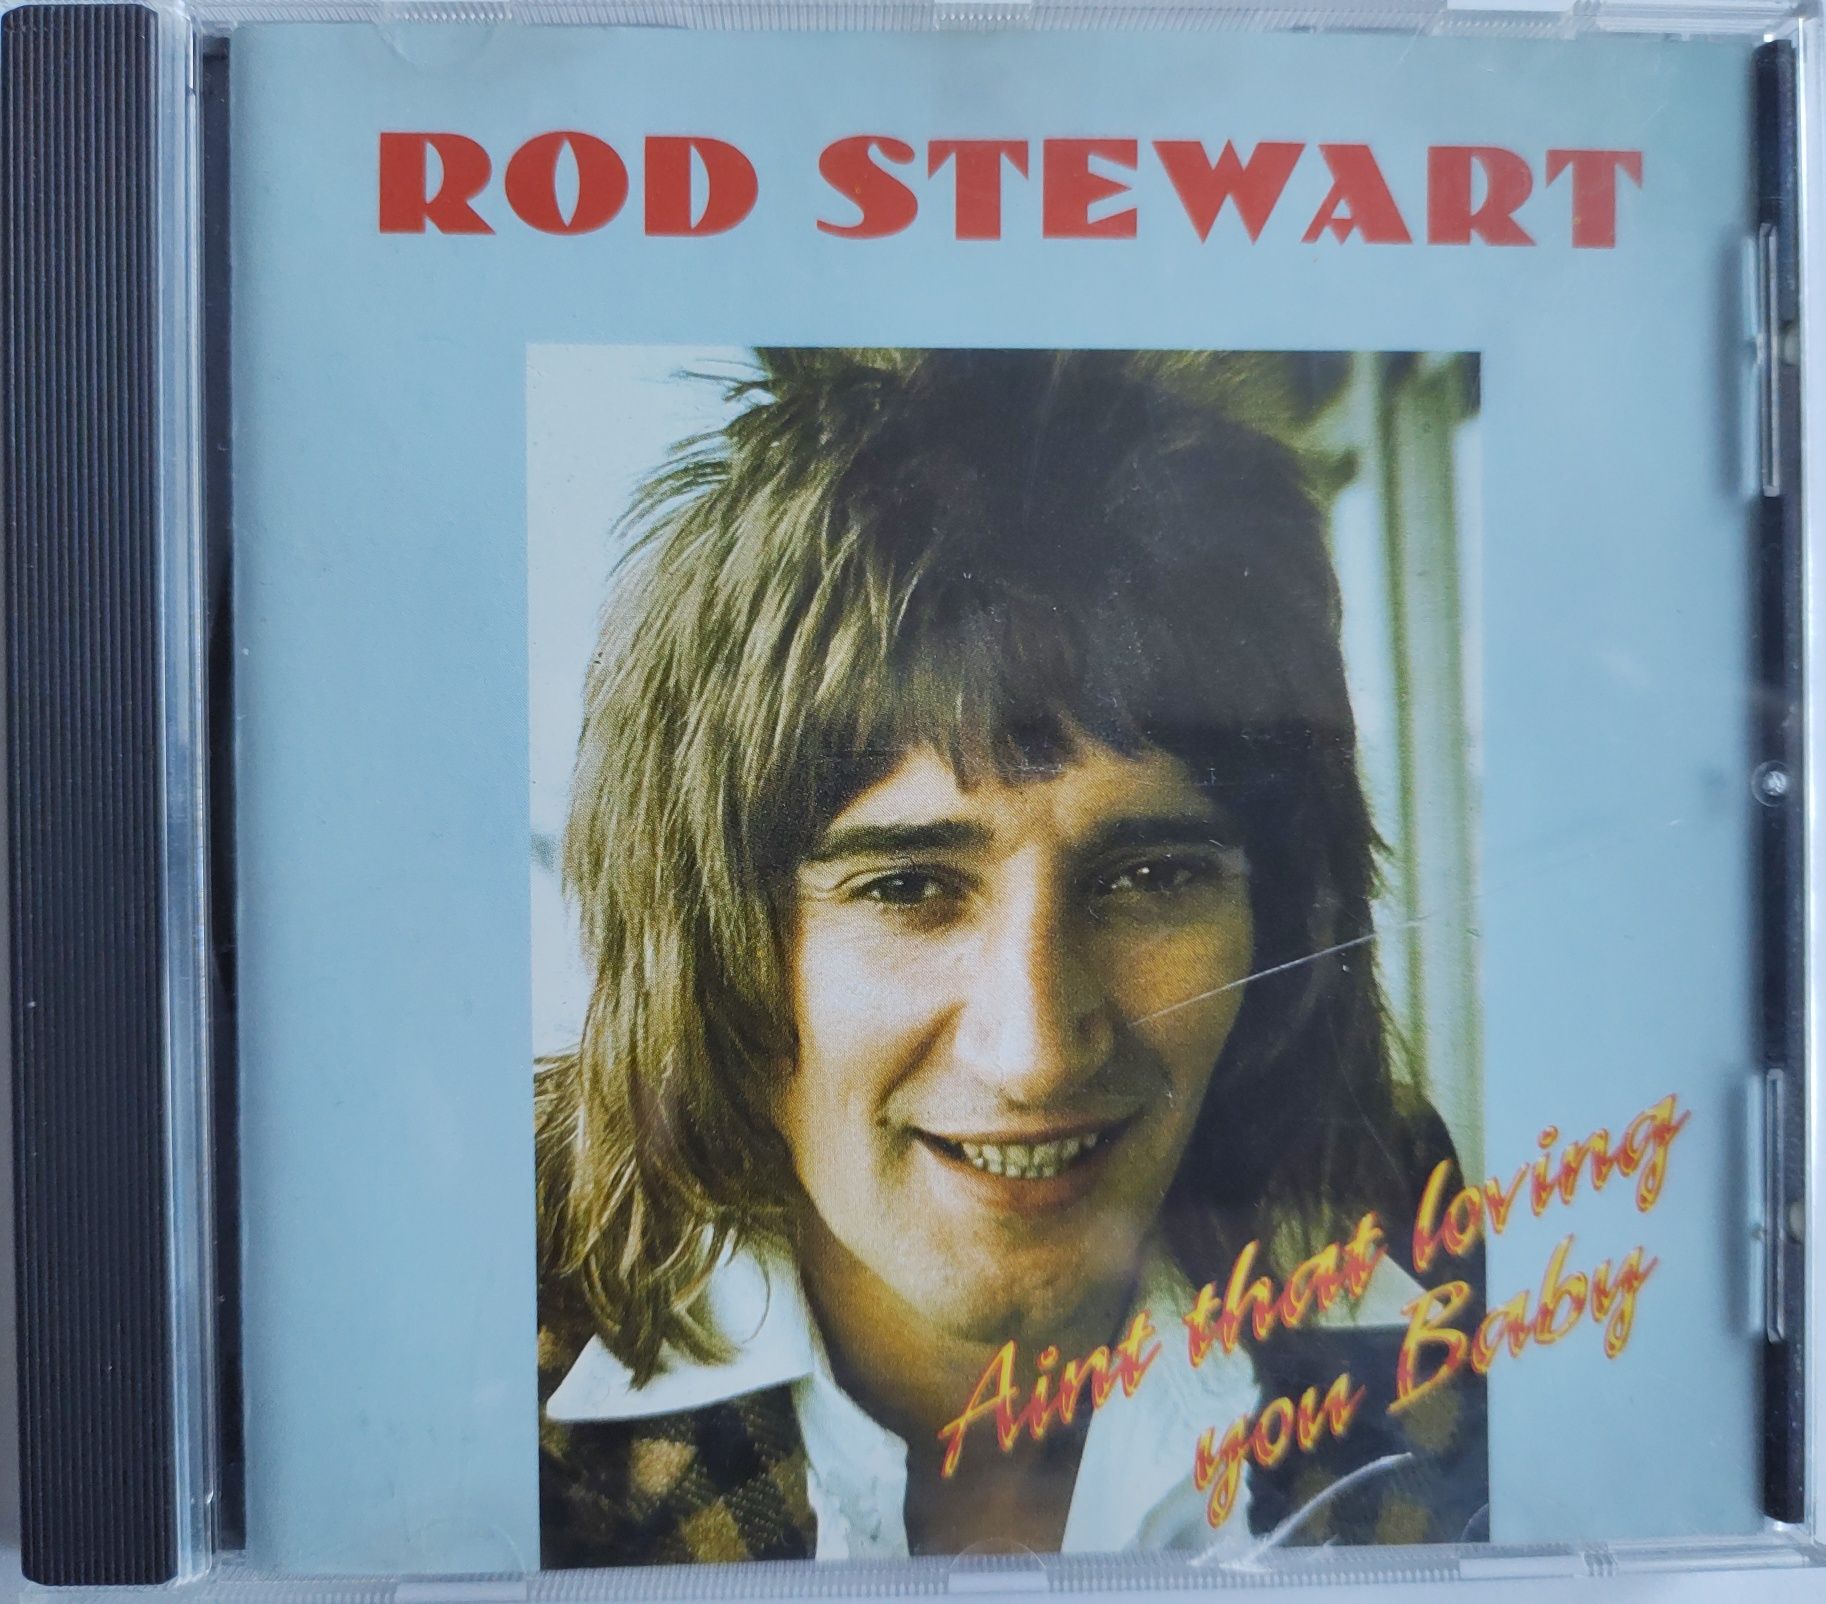 Rod Stewart Ain't that loving you Baby